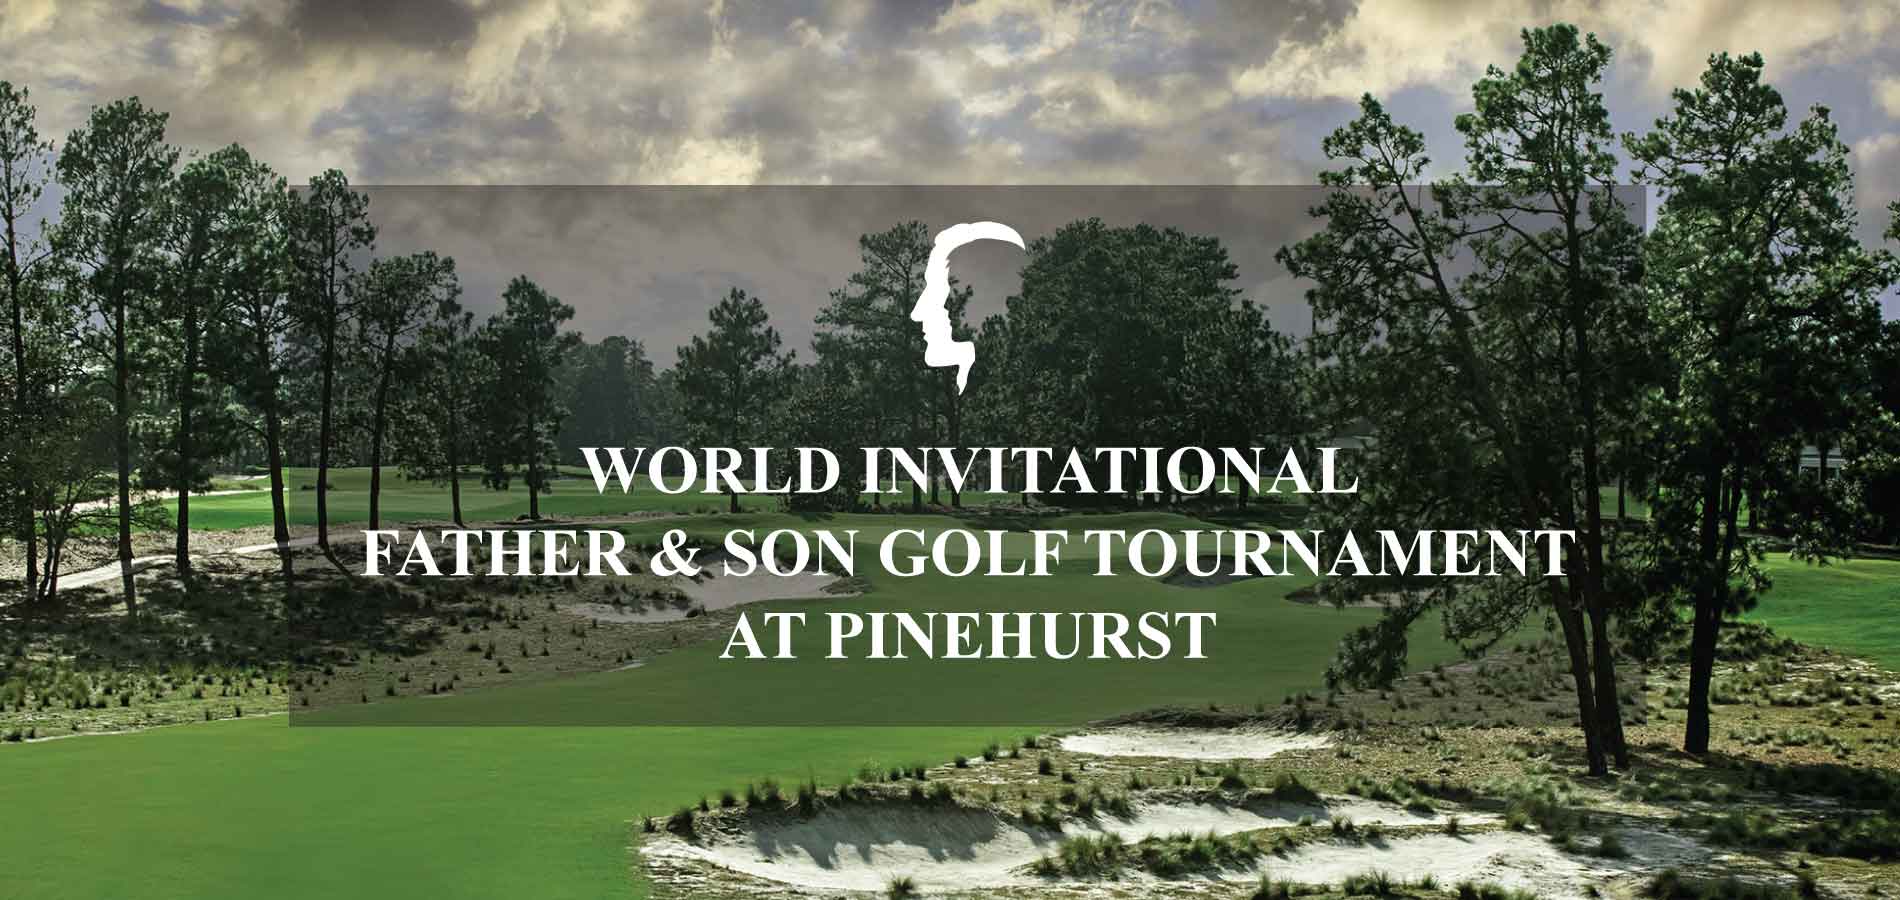 World International Father & Son Golf Tournament at Pinehurst